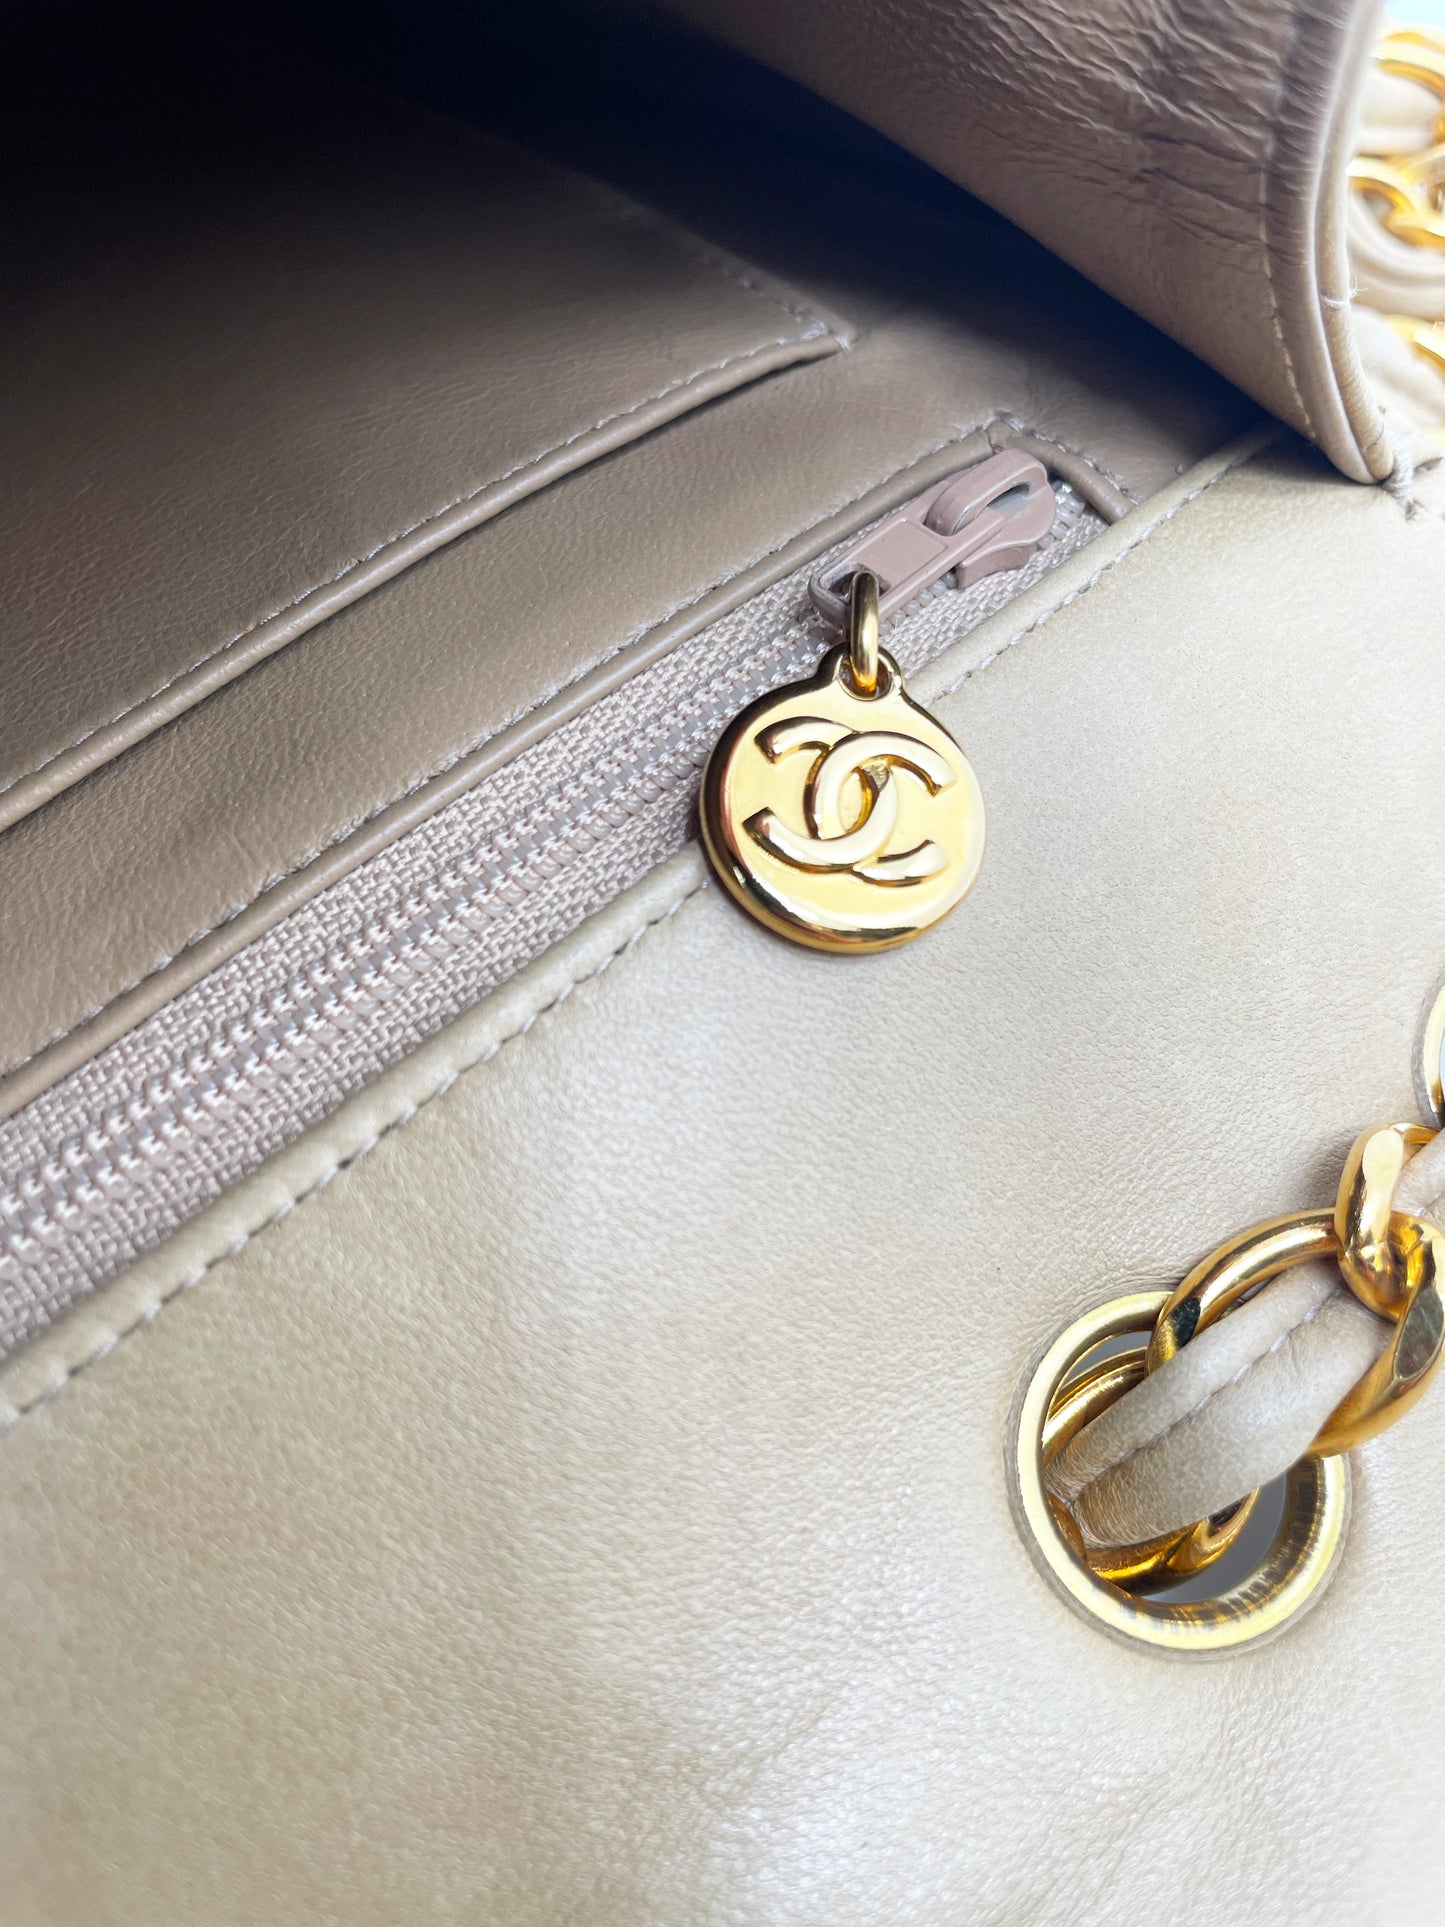 Sublime Chanel Timeless / Classic Jumbo handbag with flap Beige single flap